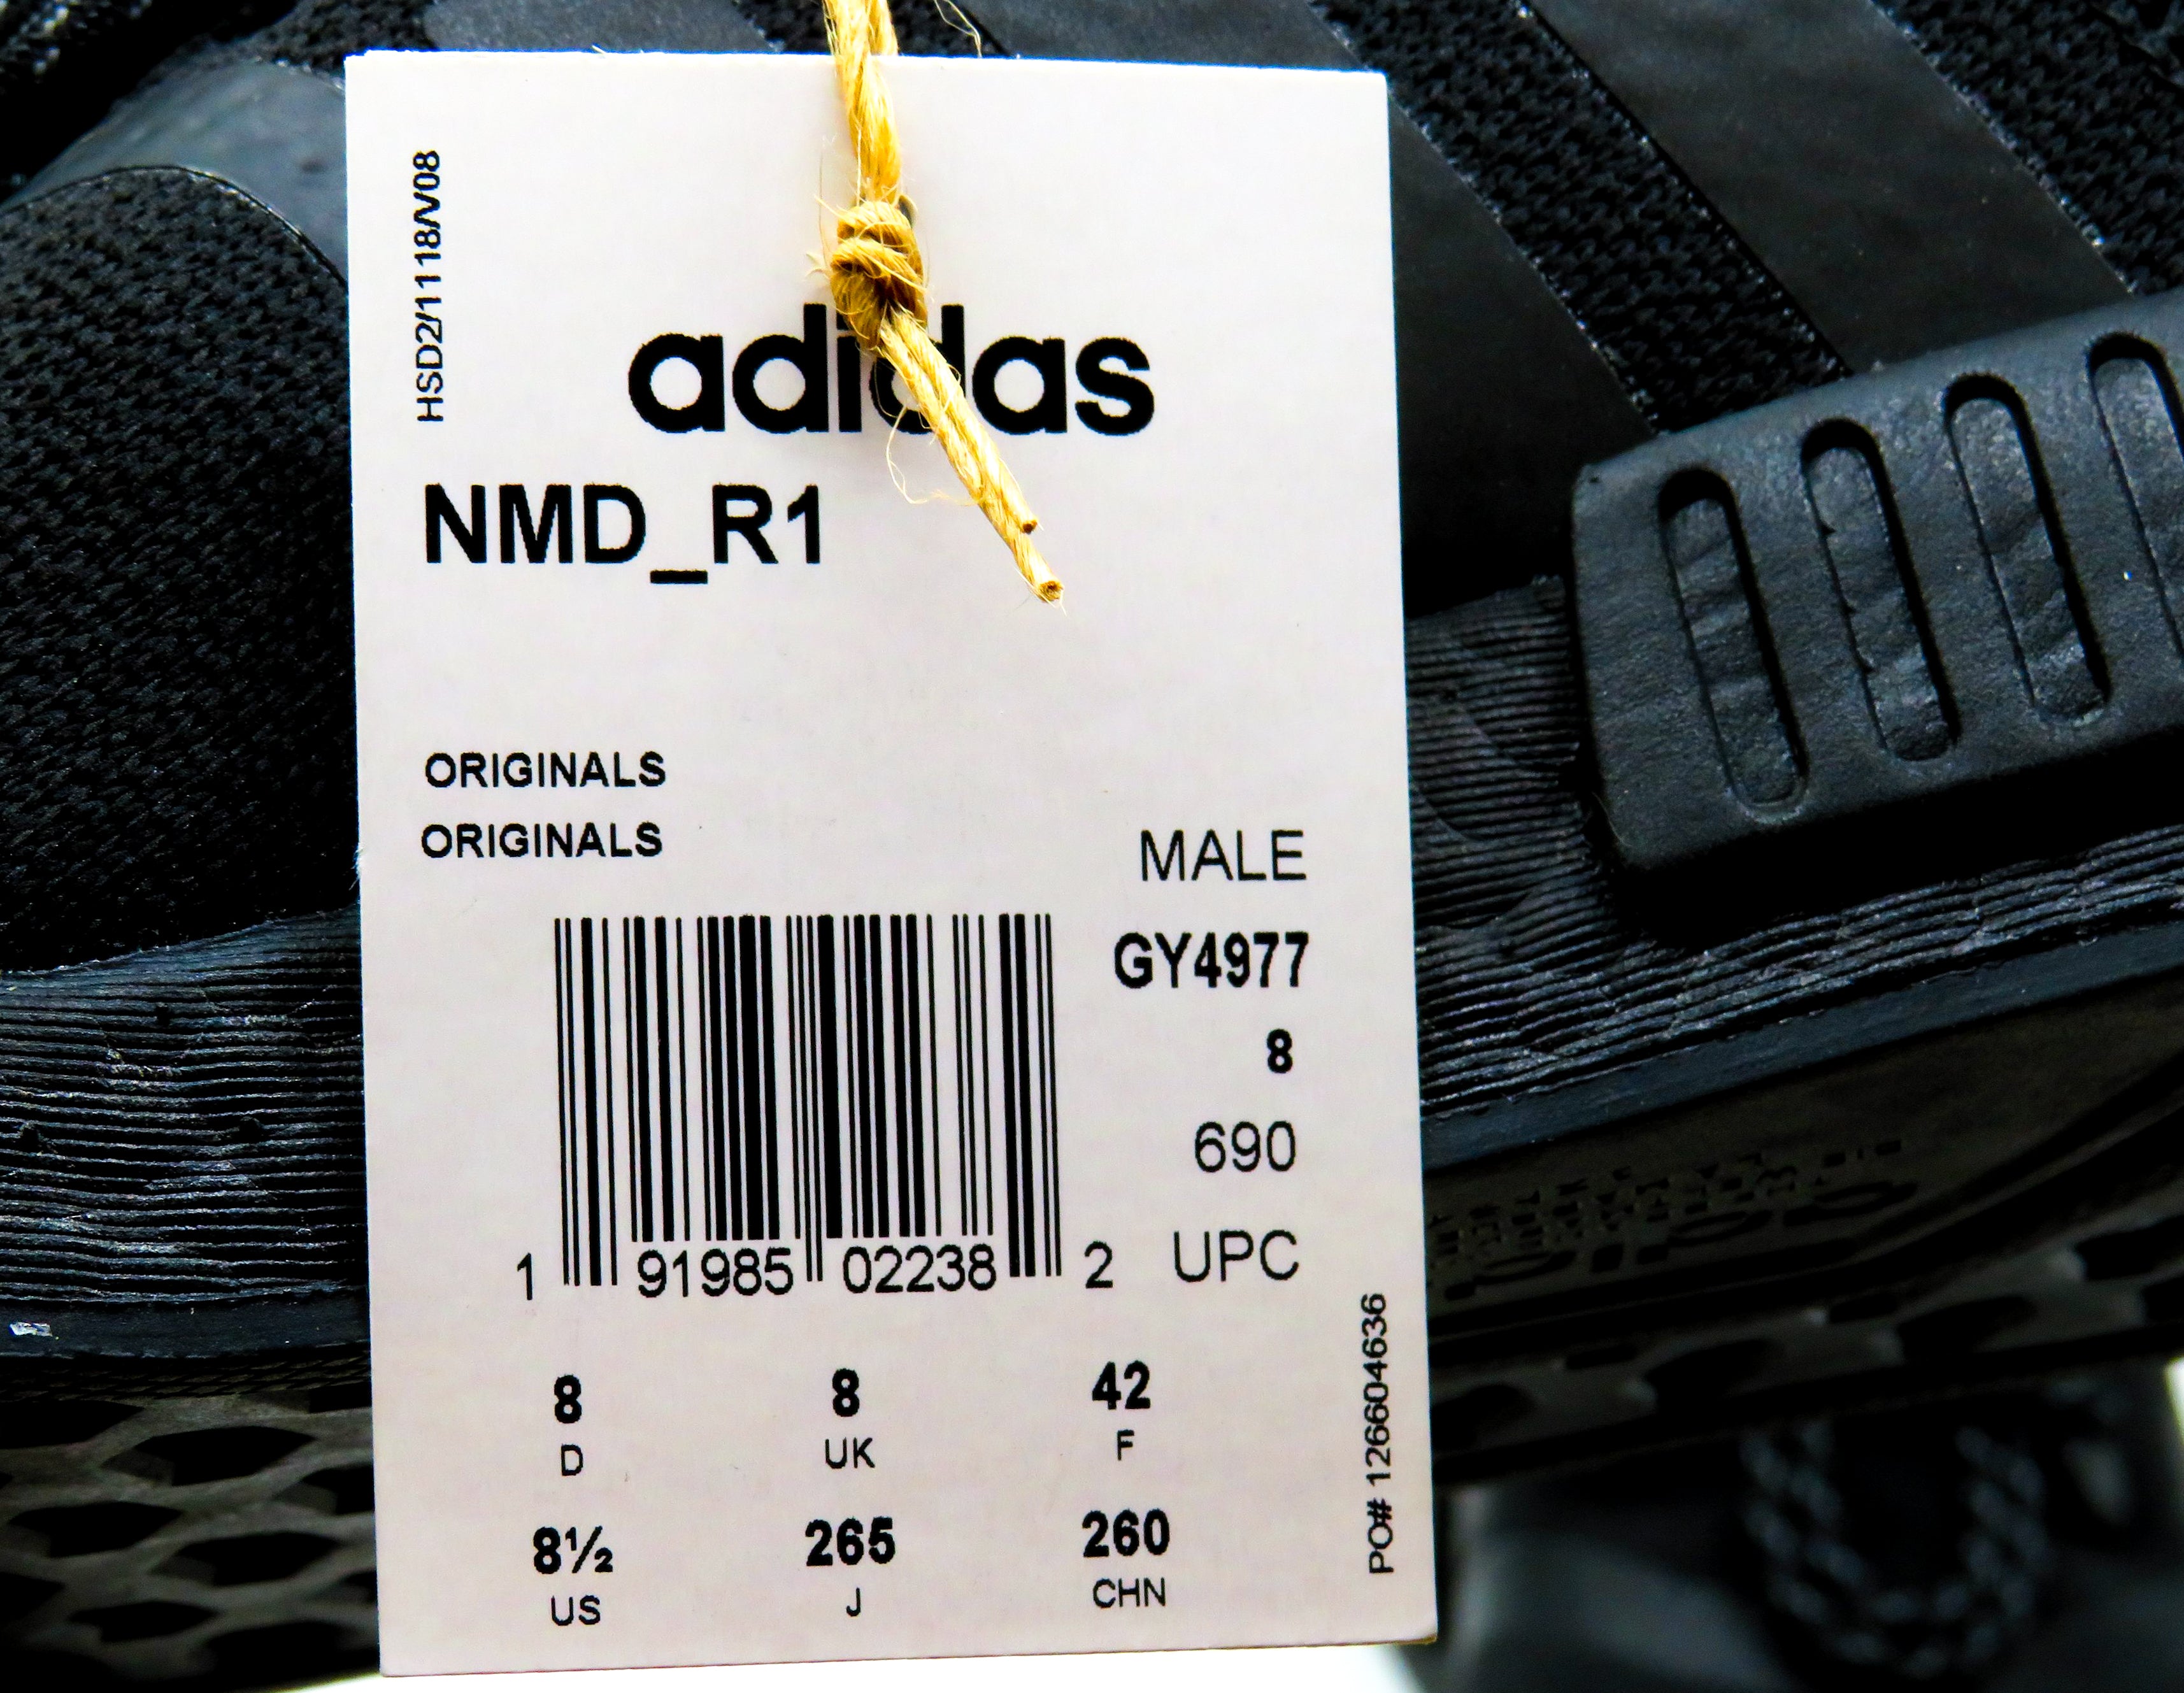 On Sale: Pharrell x adidas NMD R1 Black Future — Sneaker Shouts